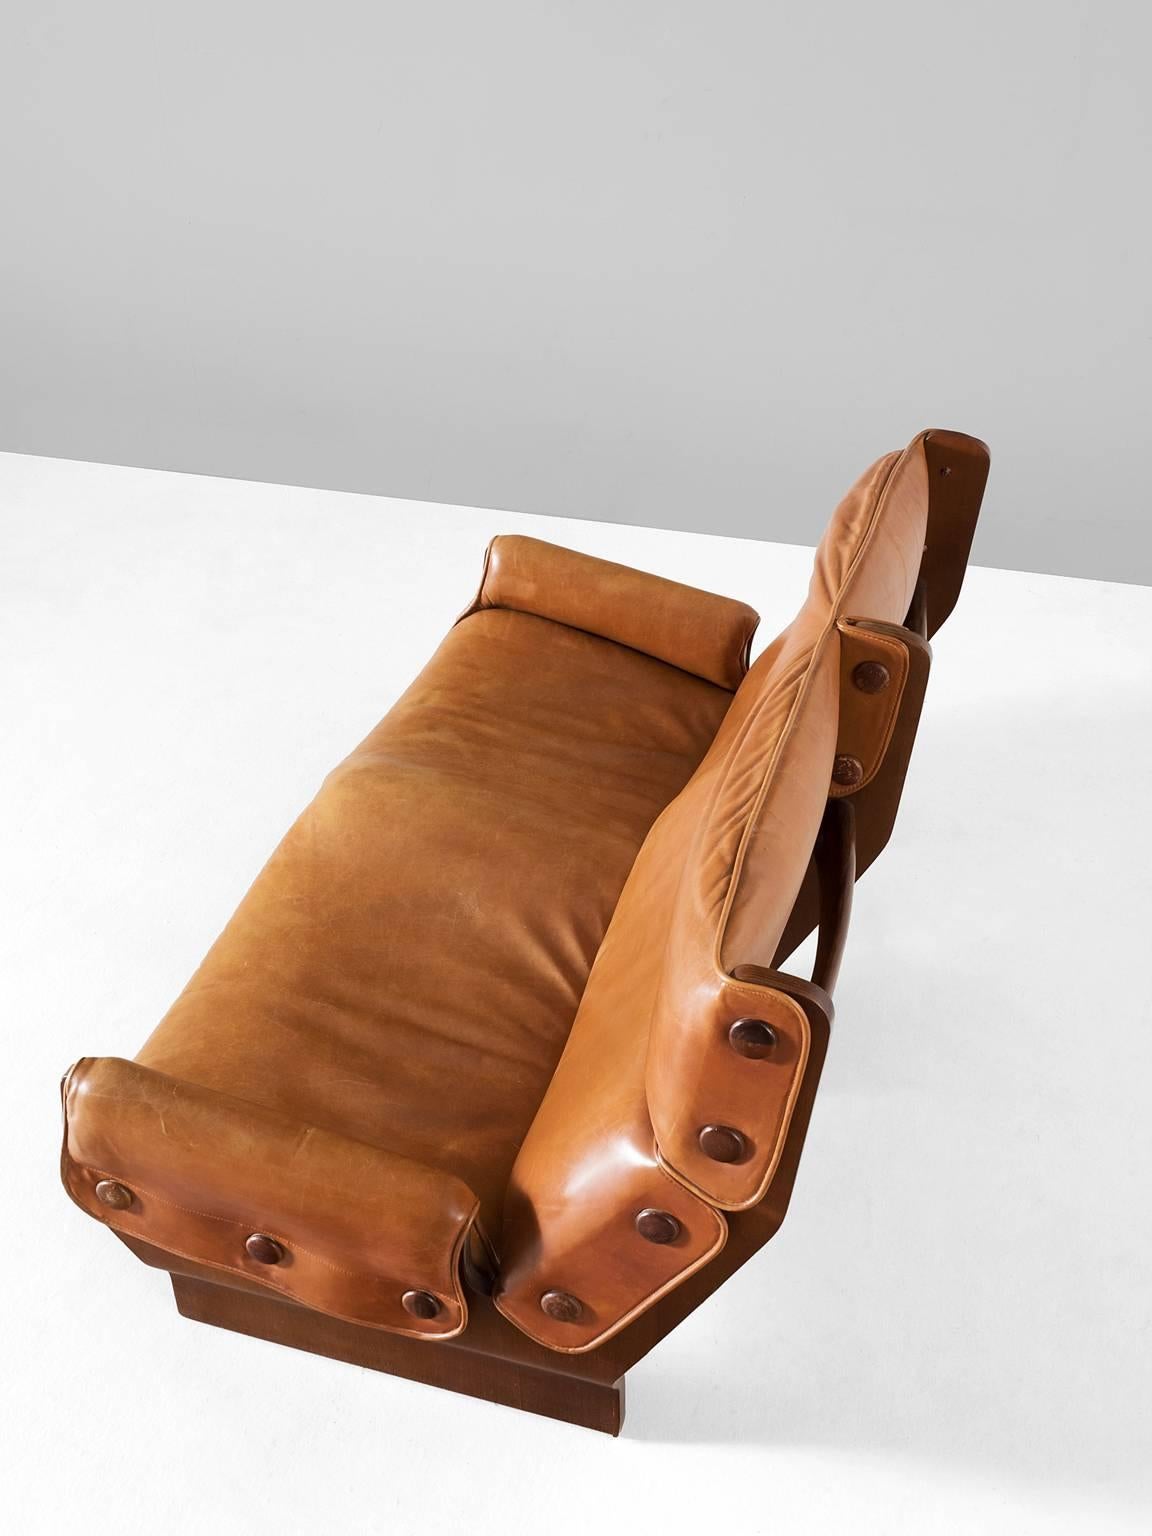 Osvaldo Borsani Teak and Cognac Leather Sofa for Tecno, Italy In Good Condition In Waalwijk, NL